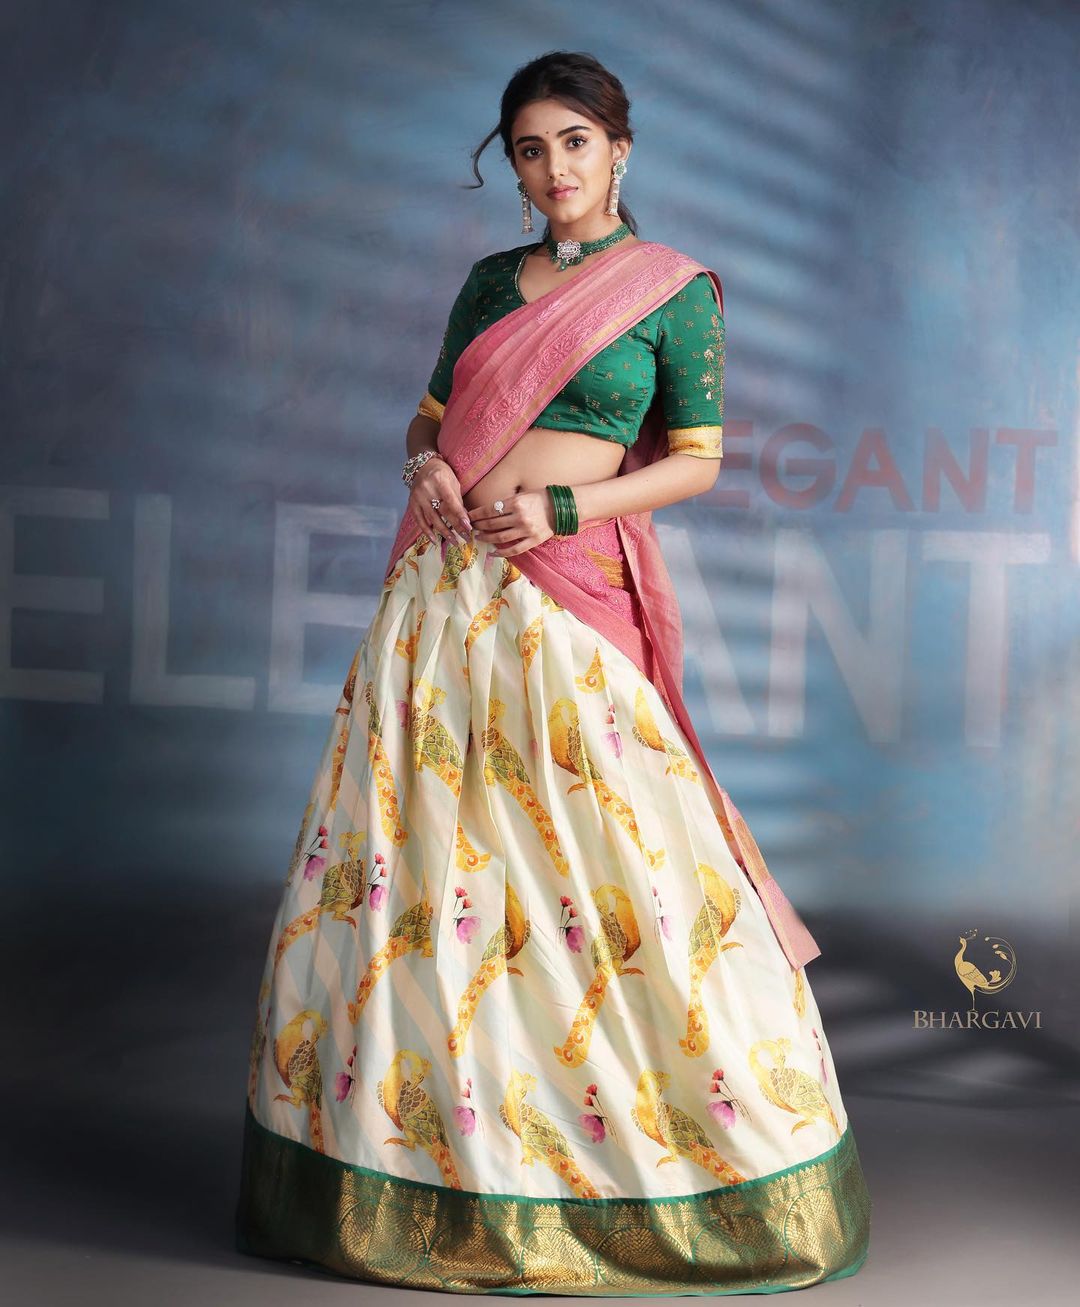 Malvika Sharma In Elegant Lehenga Outfit Look